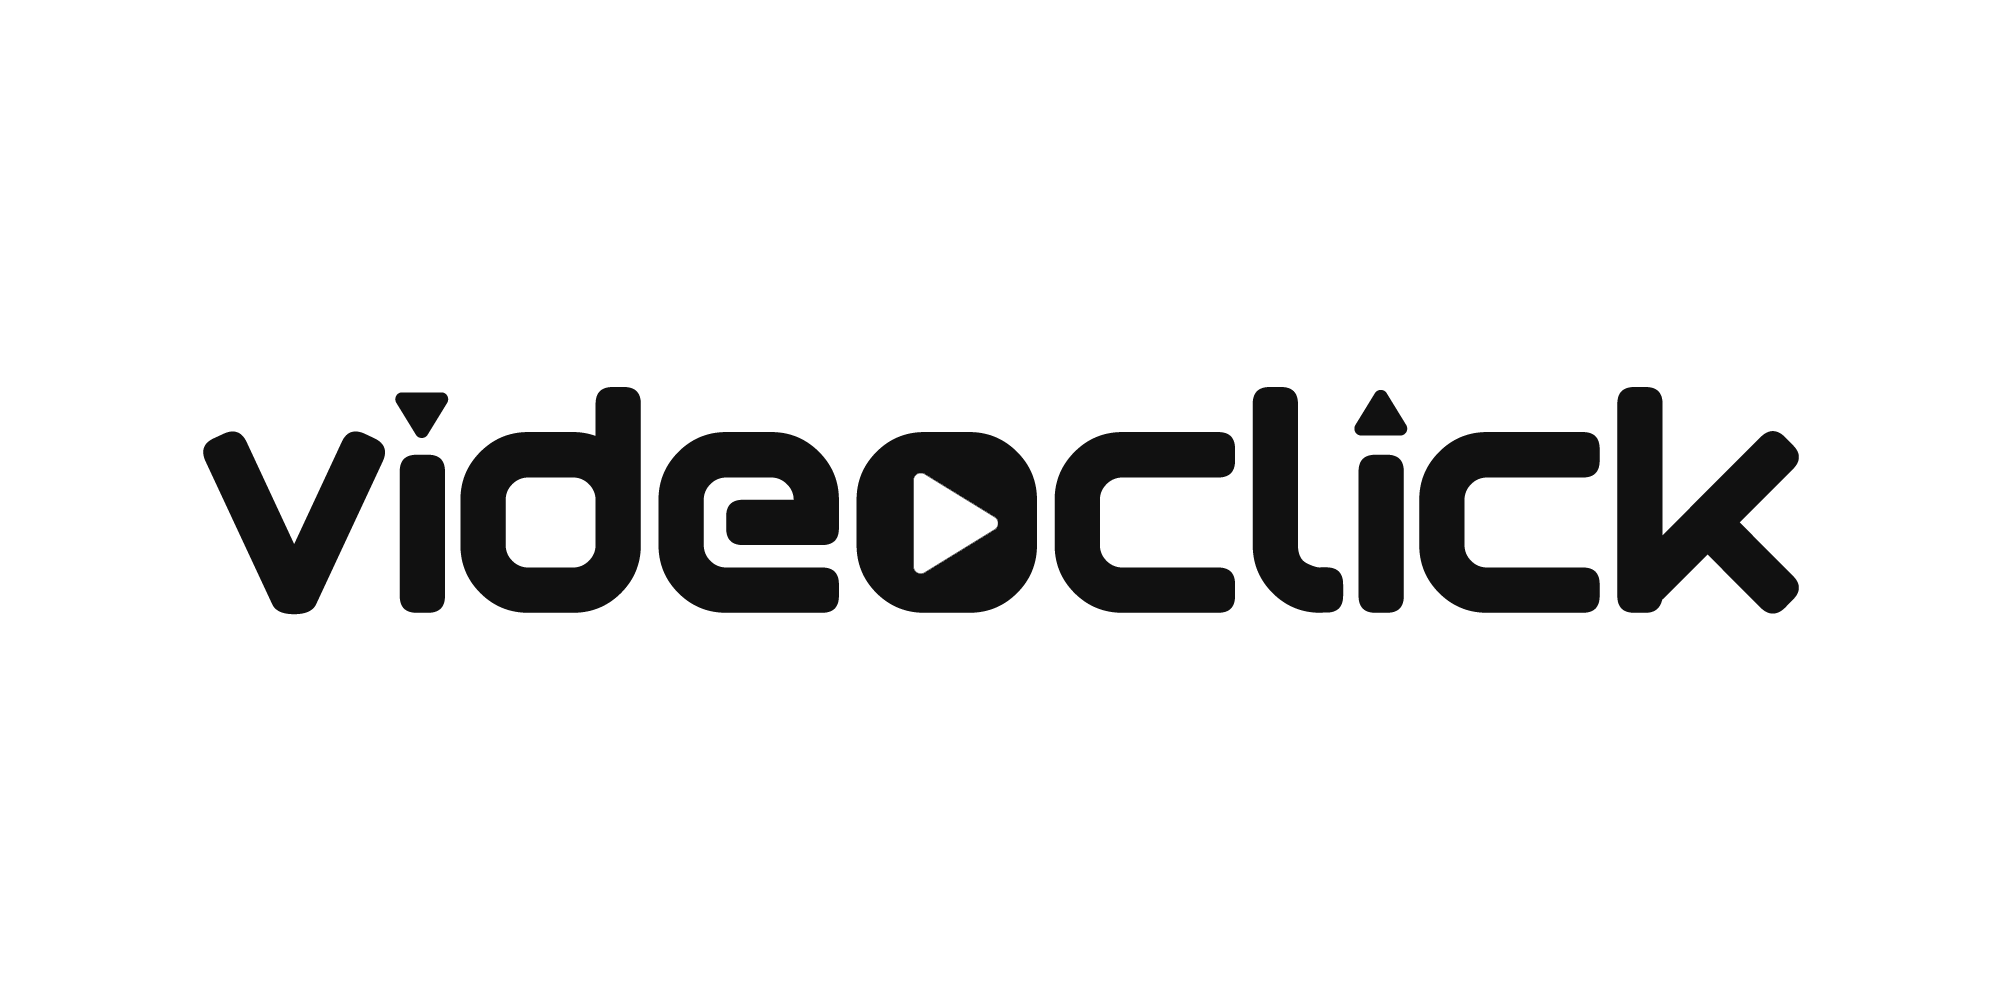 videoclick-logo-dark